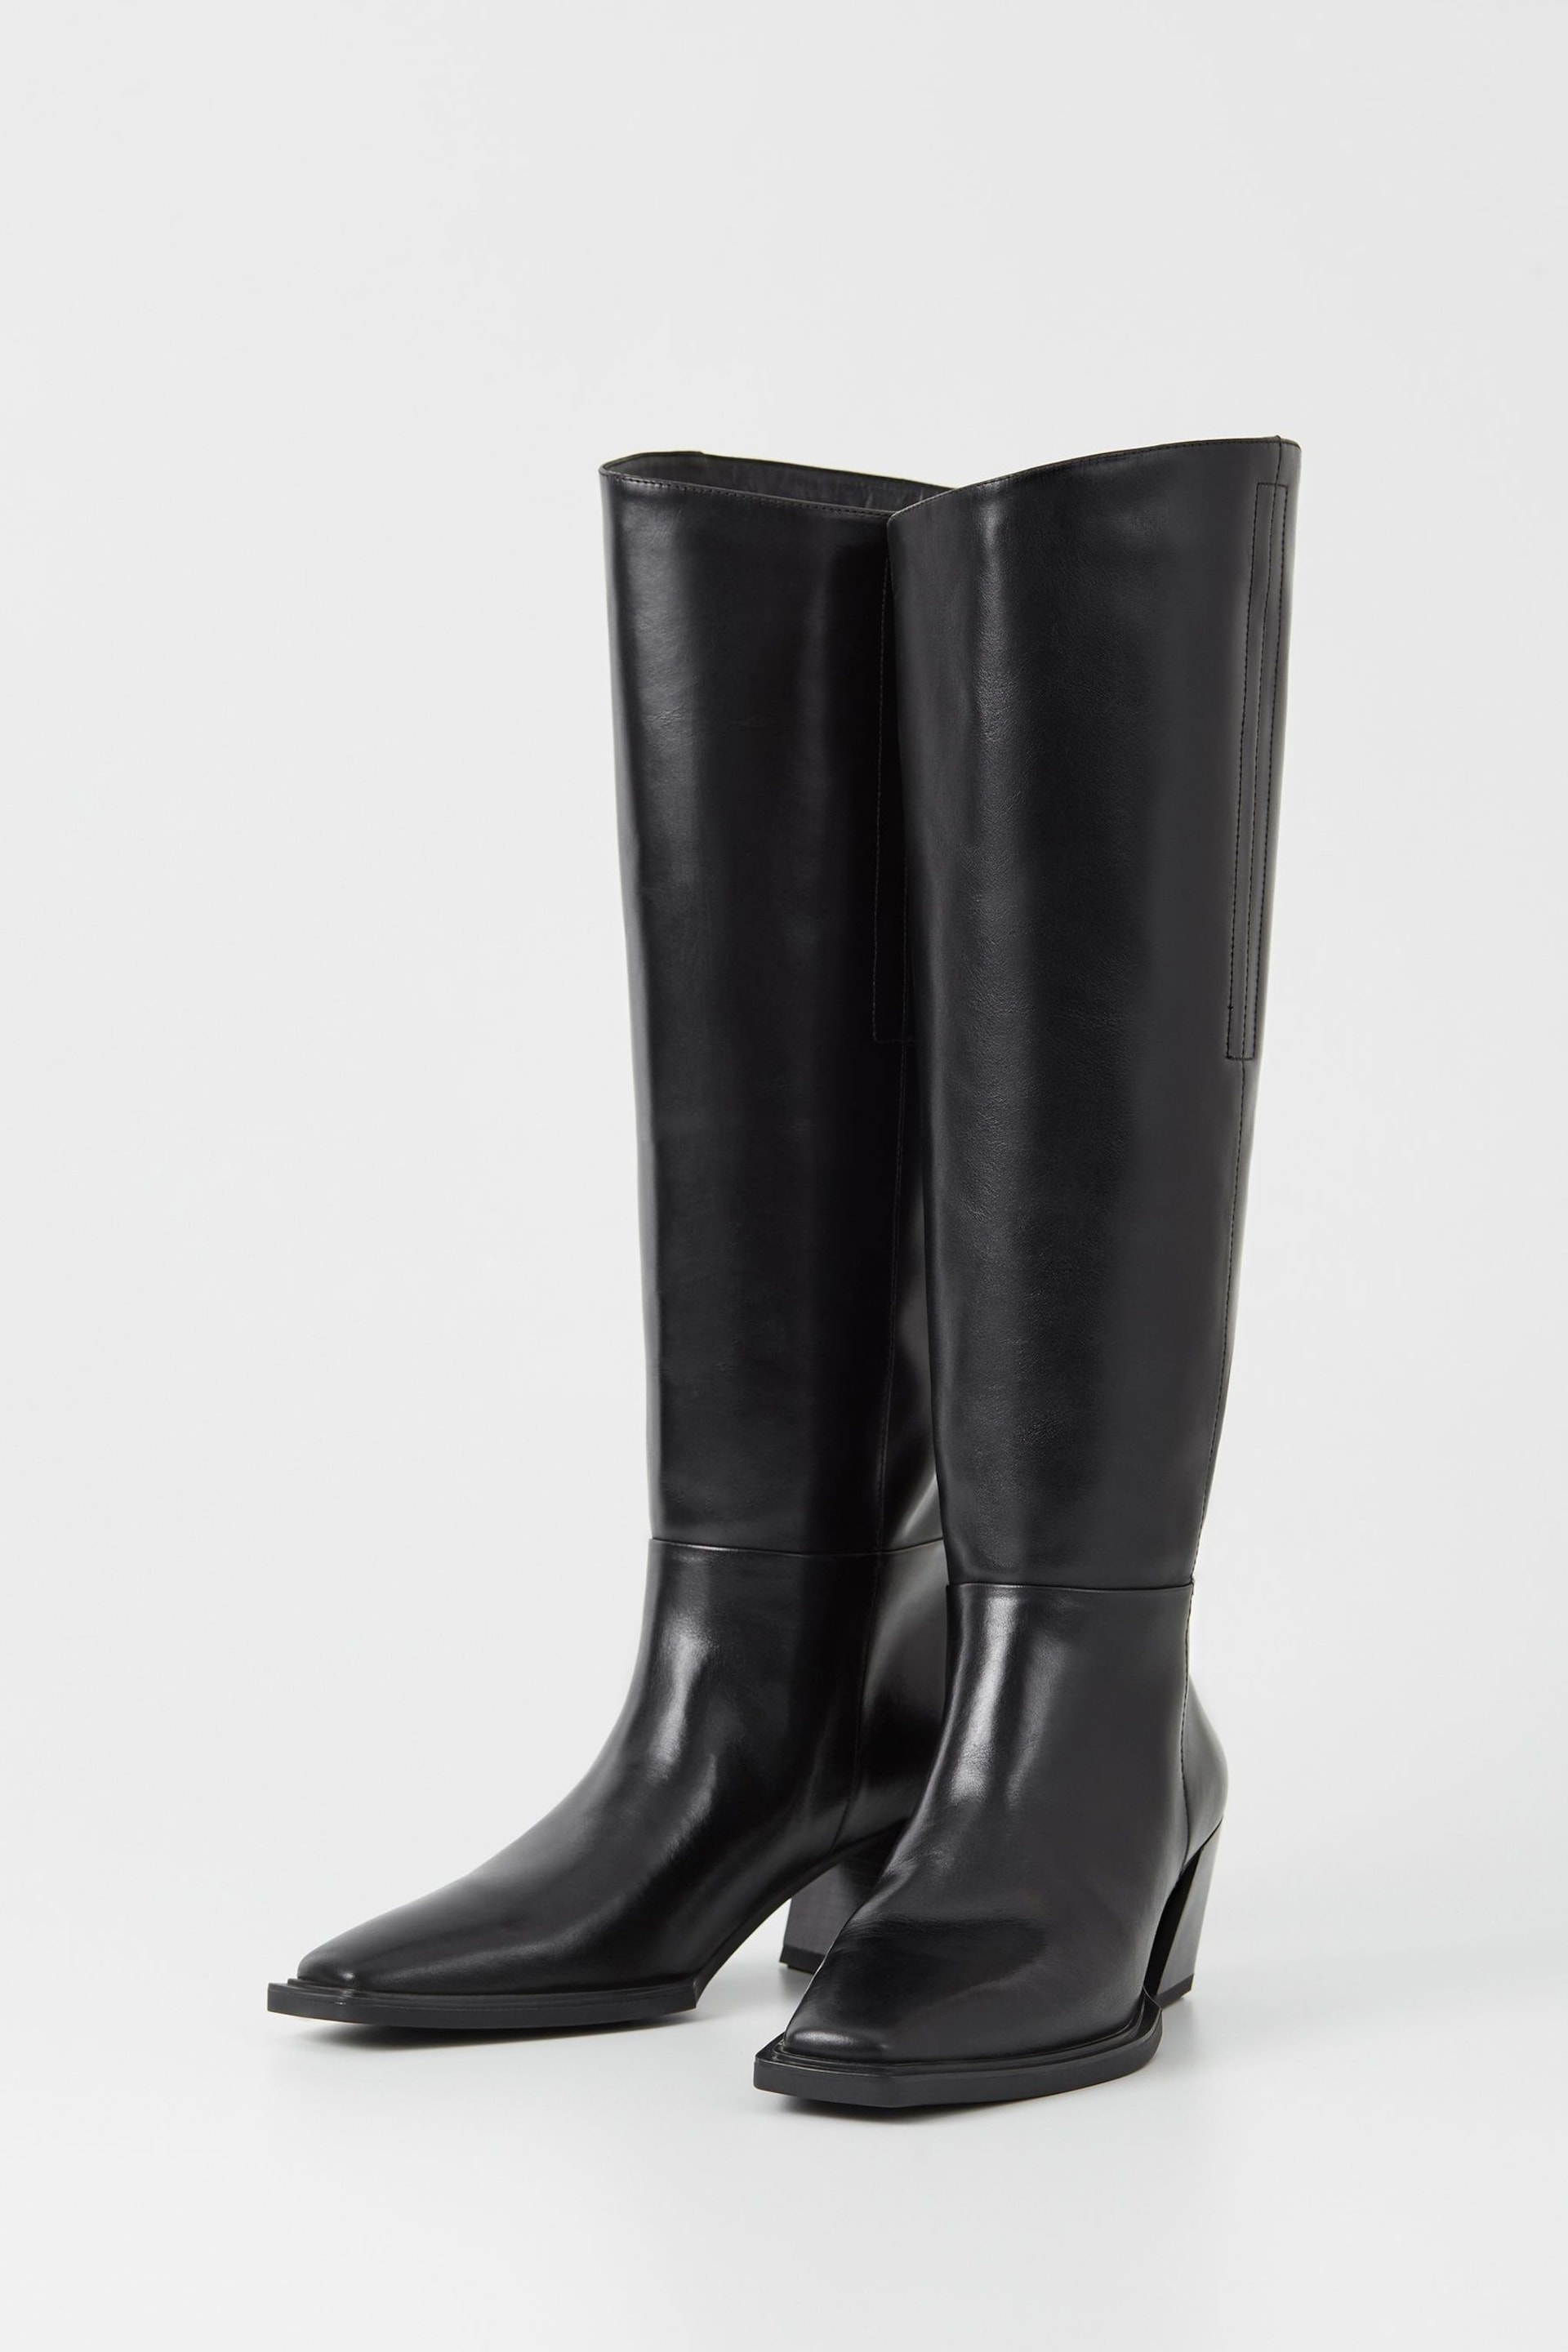 Vagabond Shoemakers Alina Tall Wester Black Boots - Image 2 of 3